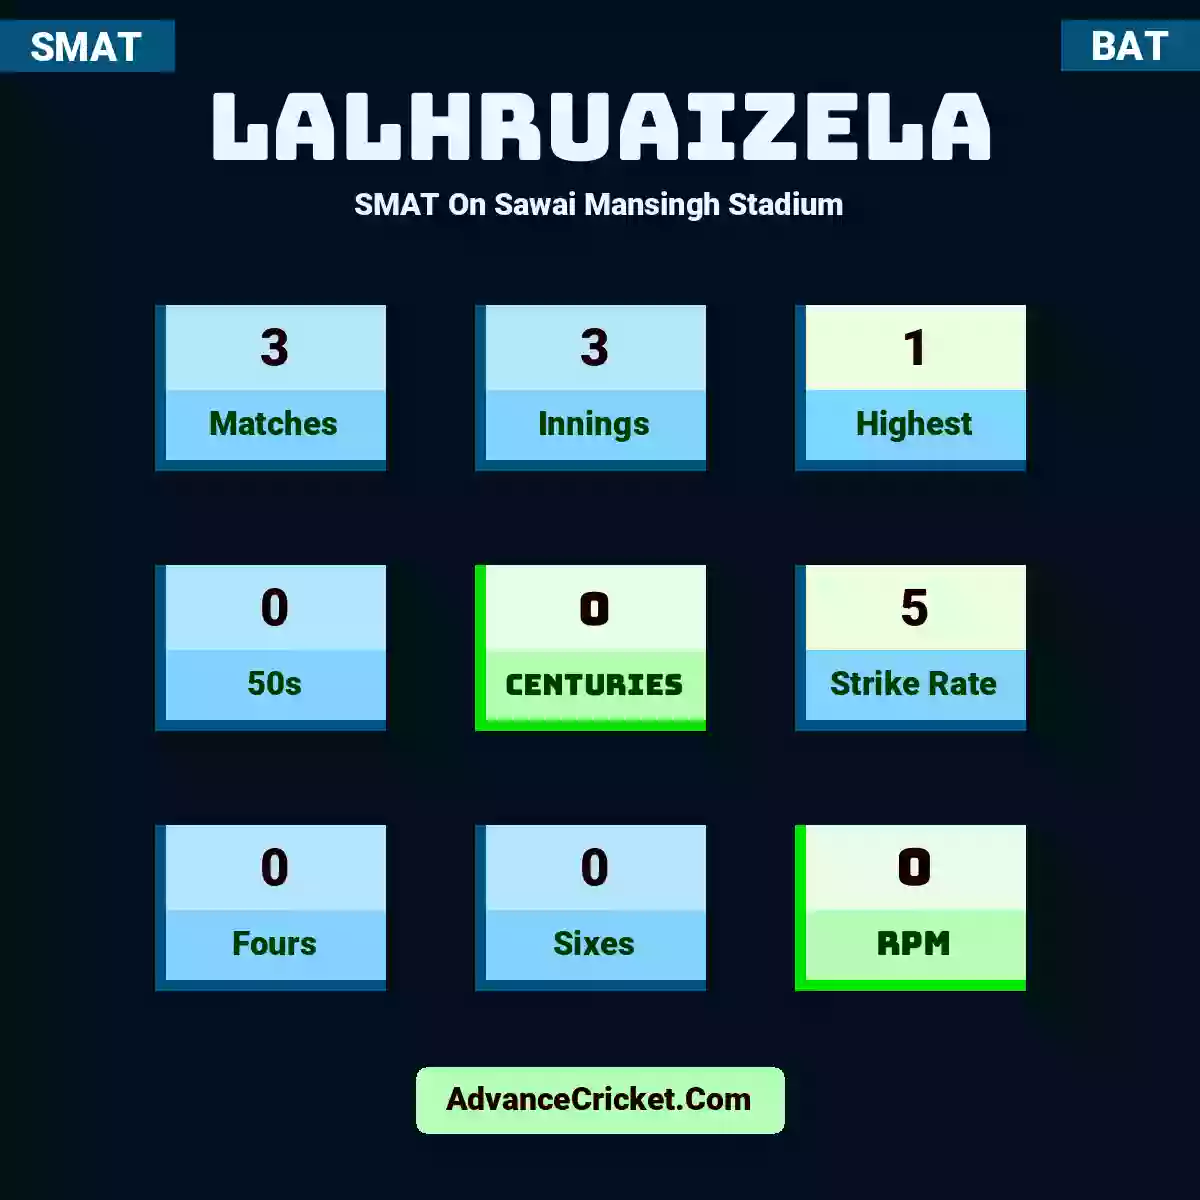 Lalhruaizela SMAT  On Sawai Mansingh Stadium, Lalhruaizela played 3 matches, scored 1 runs as highest, 0 half-centuries, and 0 centuries, with a strike rate of 5. L.Lalhruaizela hit 0 fours and 0 sixes, with an RPM of 0.